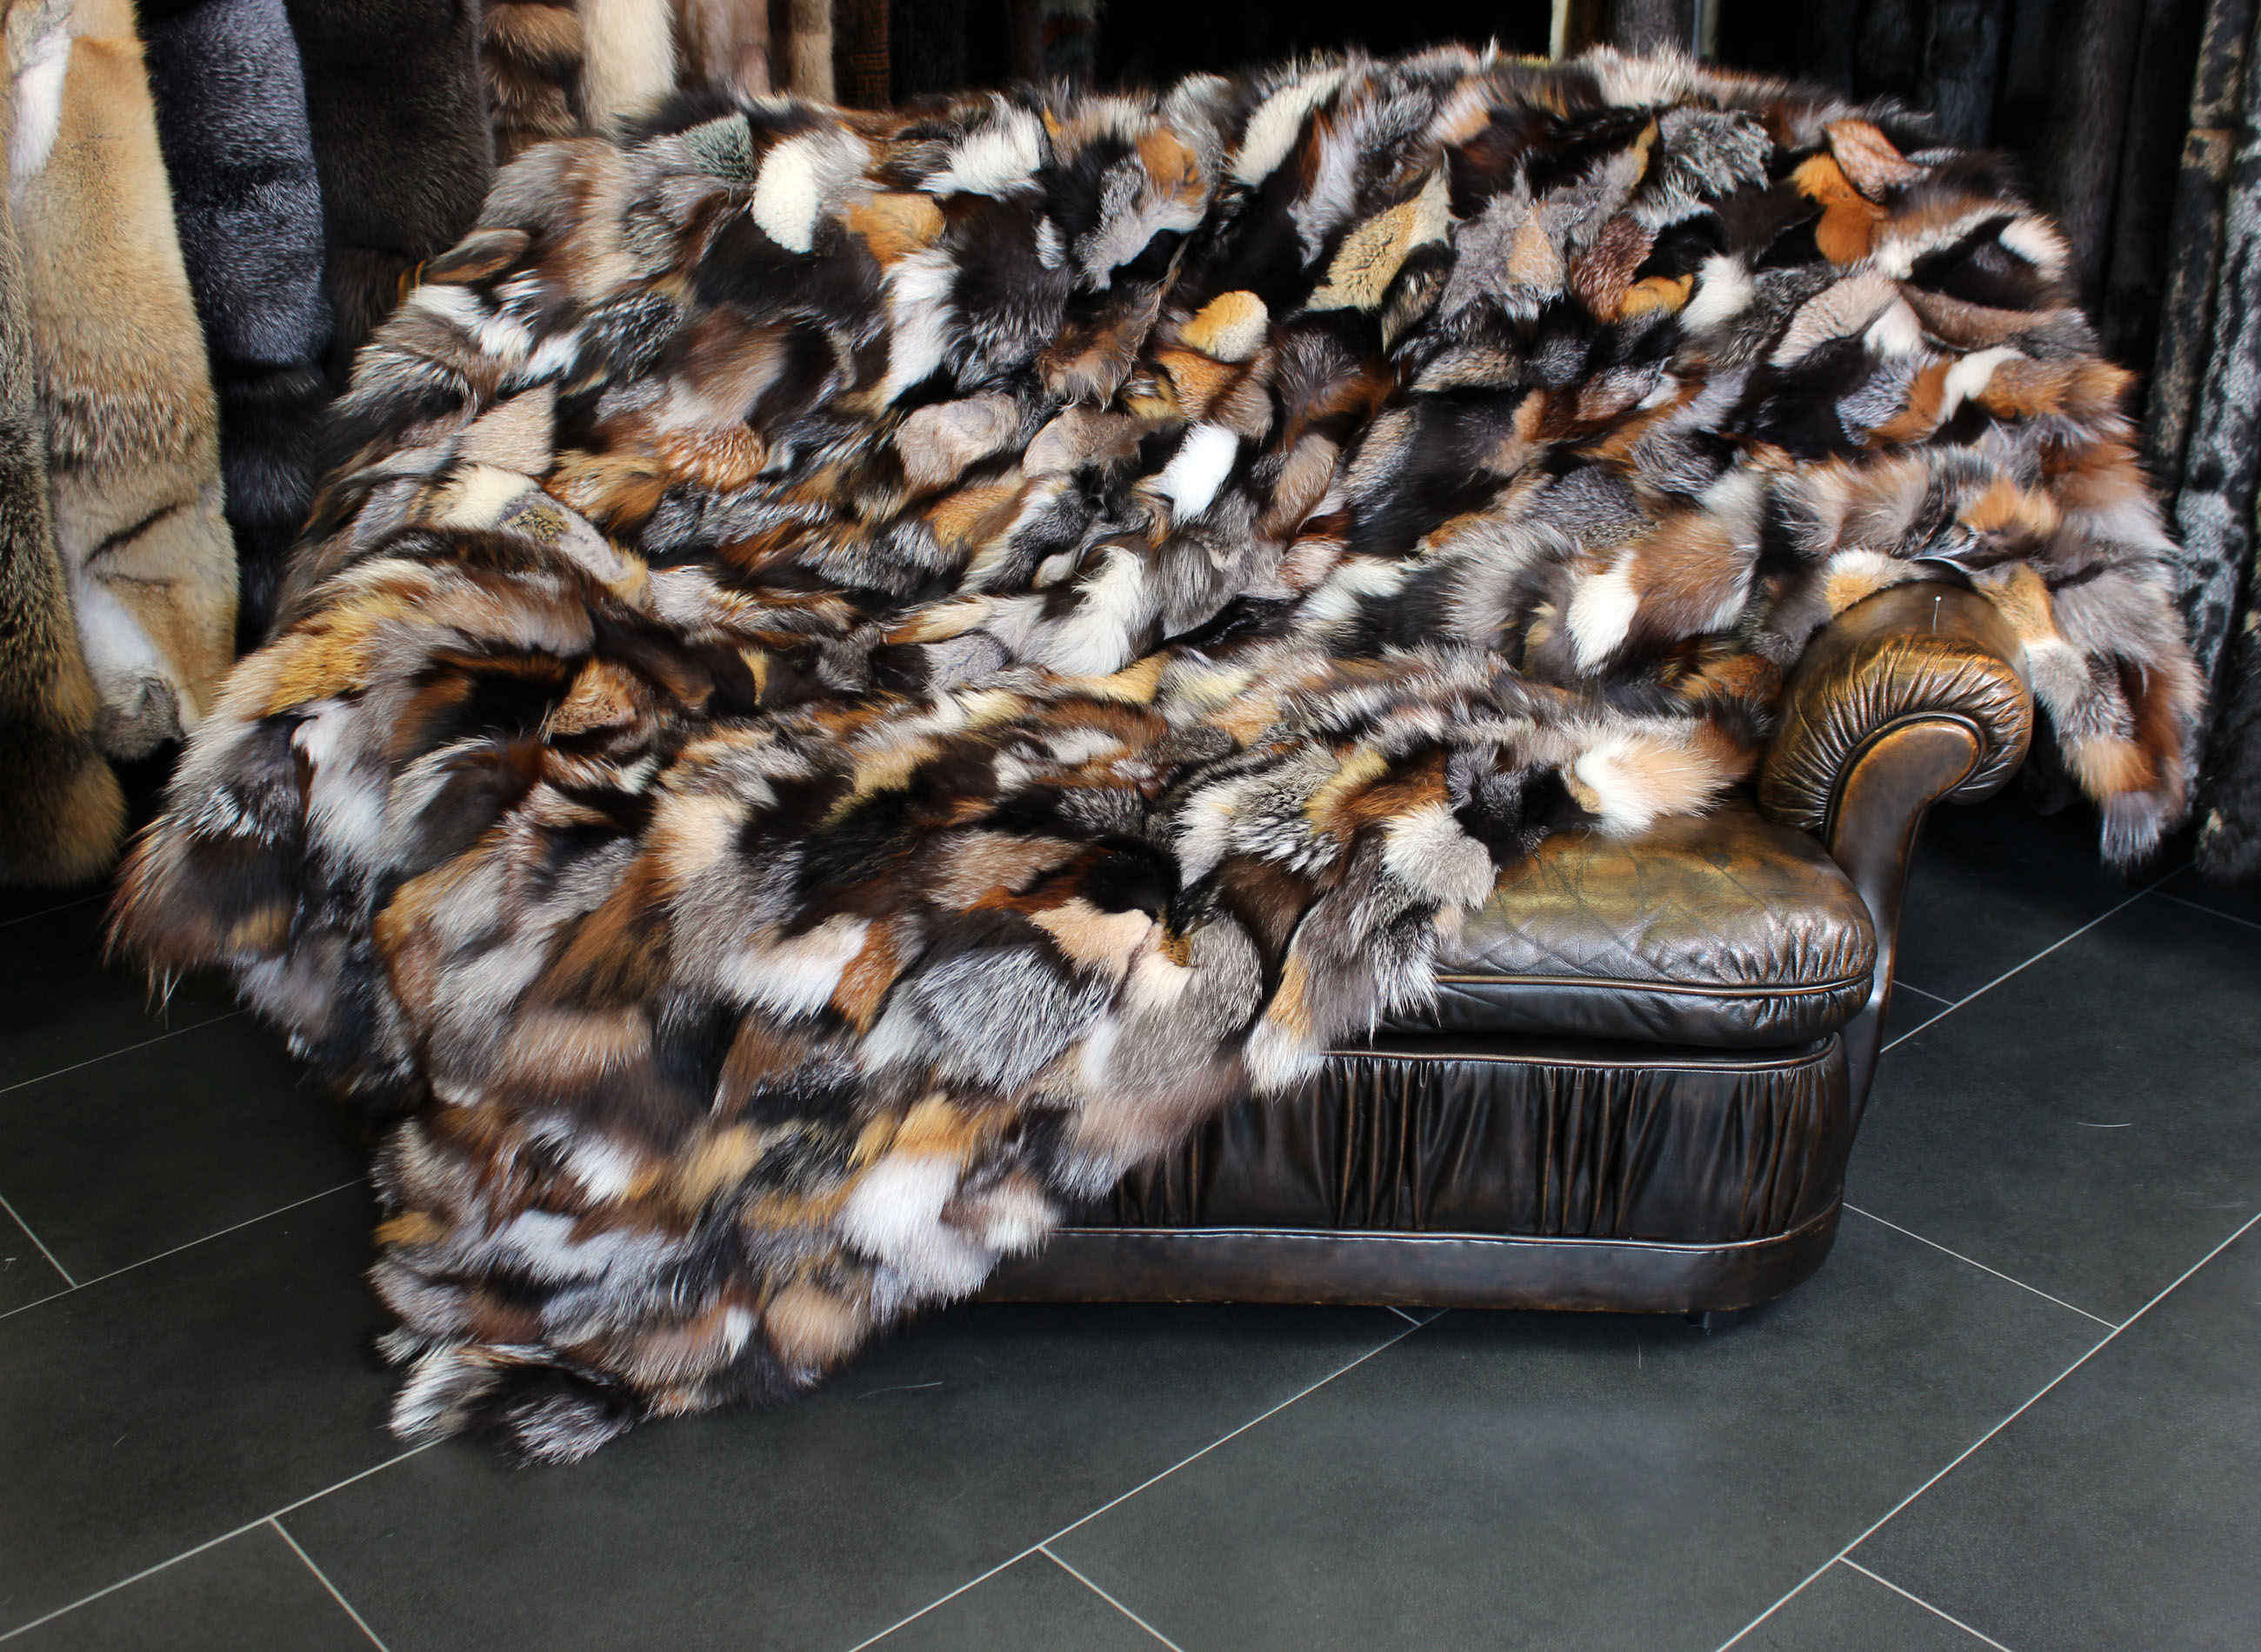 Snug Fox Pieces Fur Blanket in various natural tones